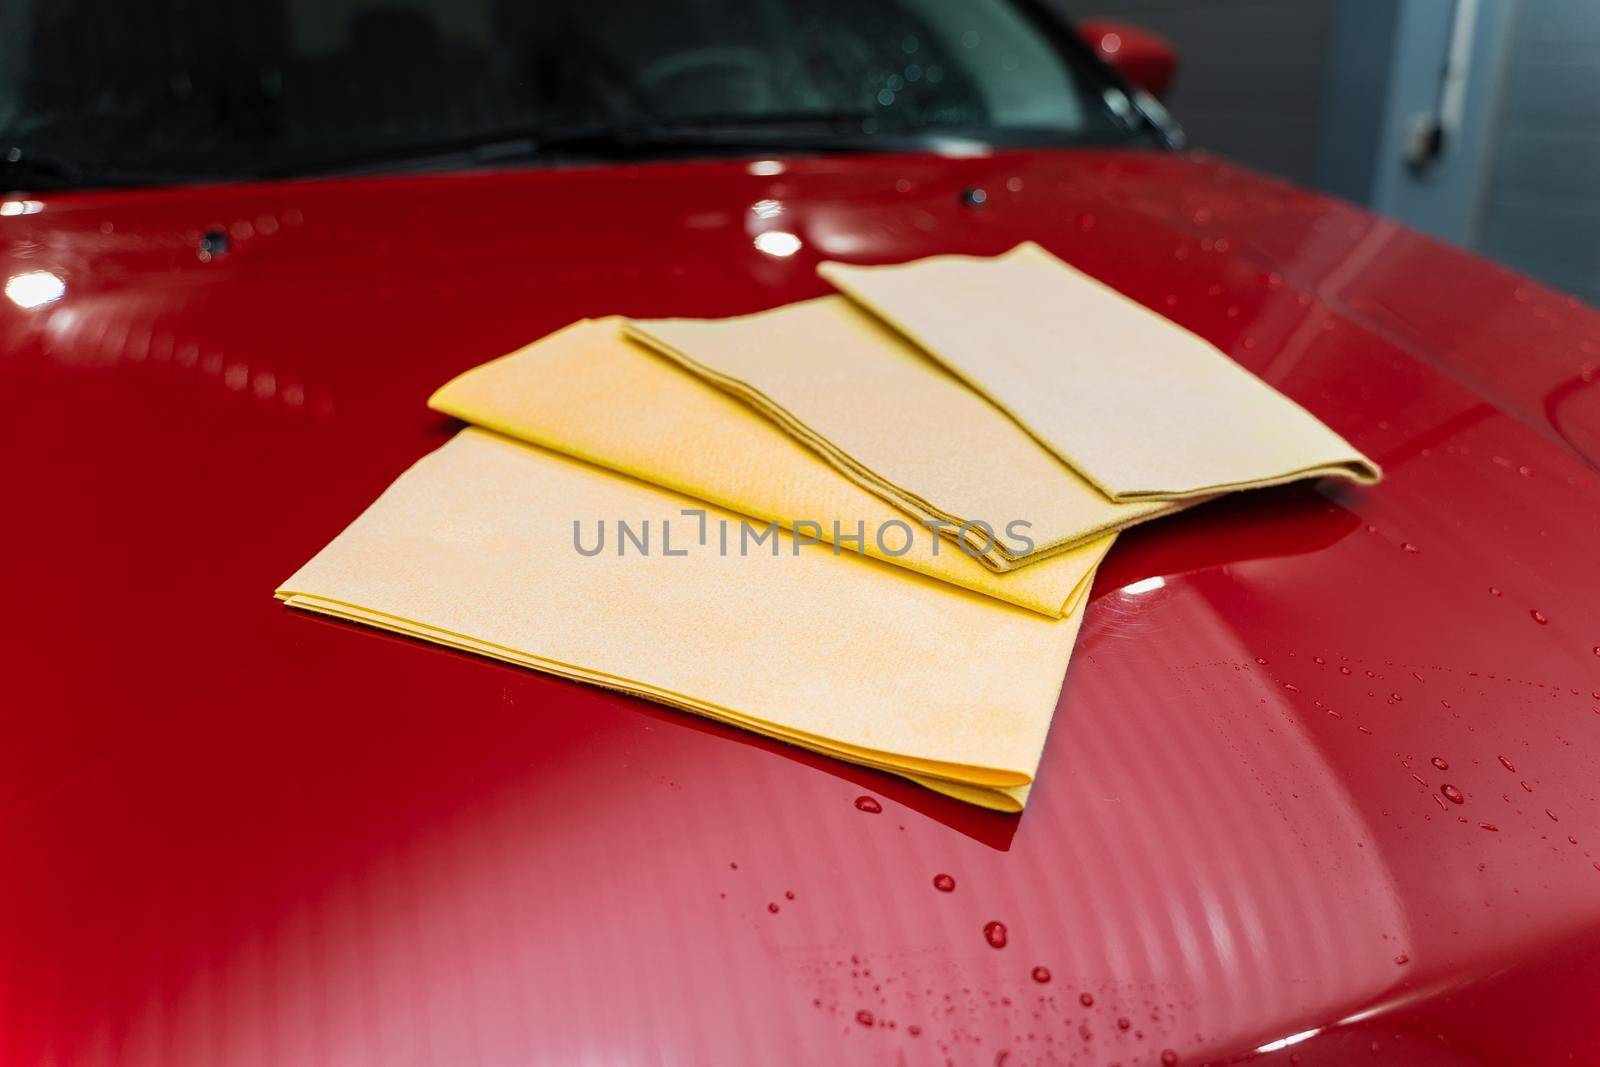 microfiber assortment cloths on the hood of the car by Rabizo